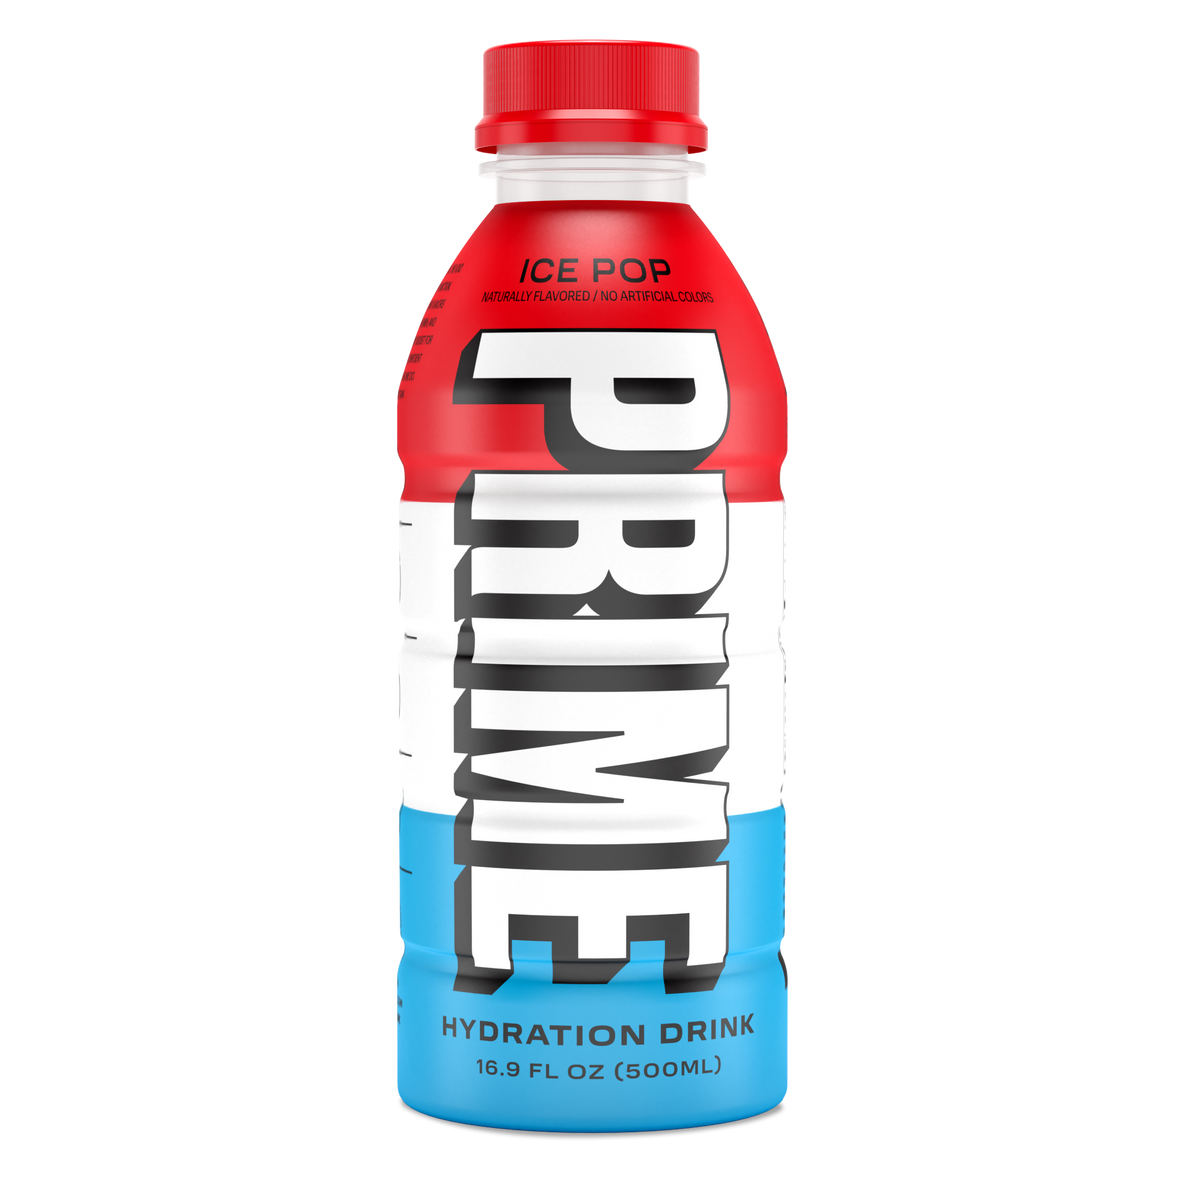  Prime Hydration Drink Blue Raspberry, 16.9oz Bottles